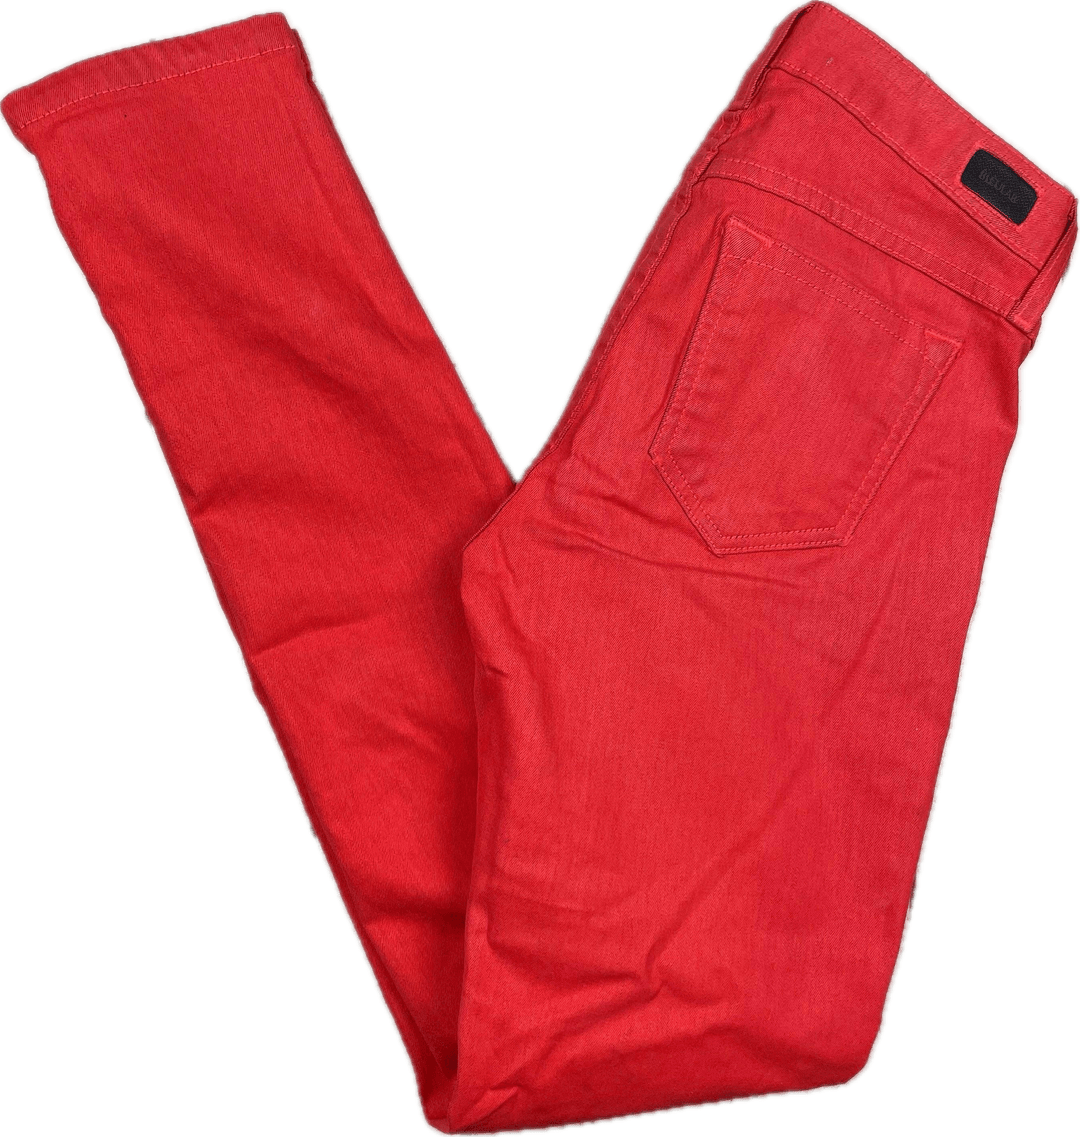 Bleulab USA ‘Detour Leggings’ Fully Reversible Red Skinny Jeans -Size 25 - Jean Pool